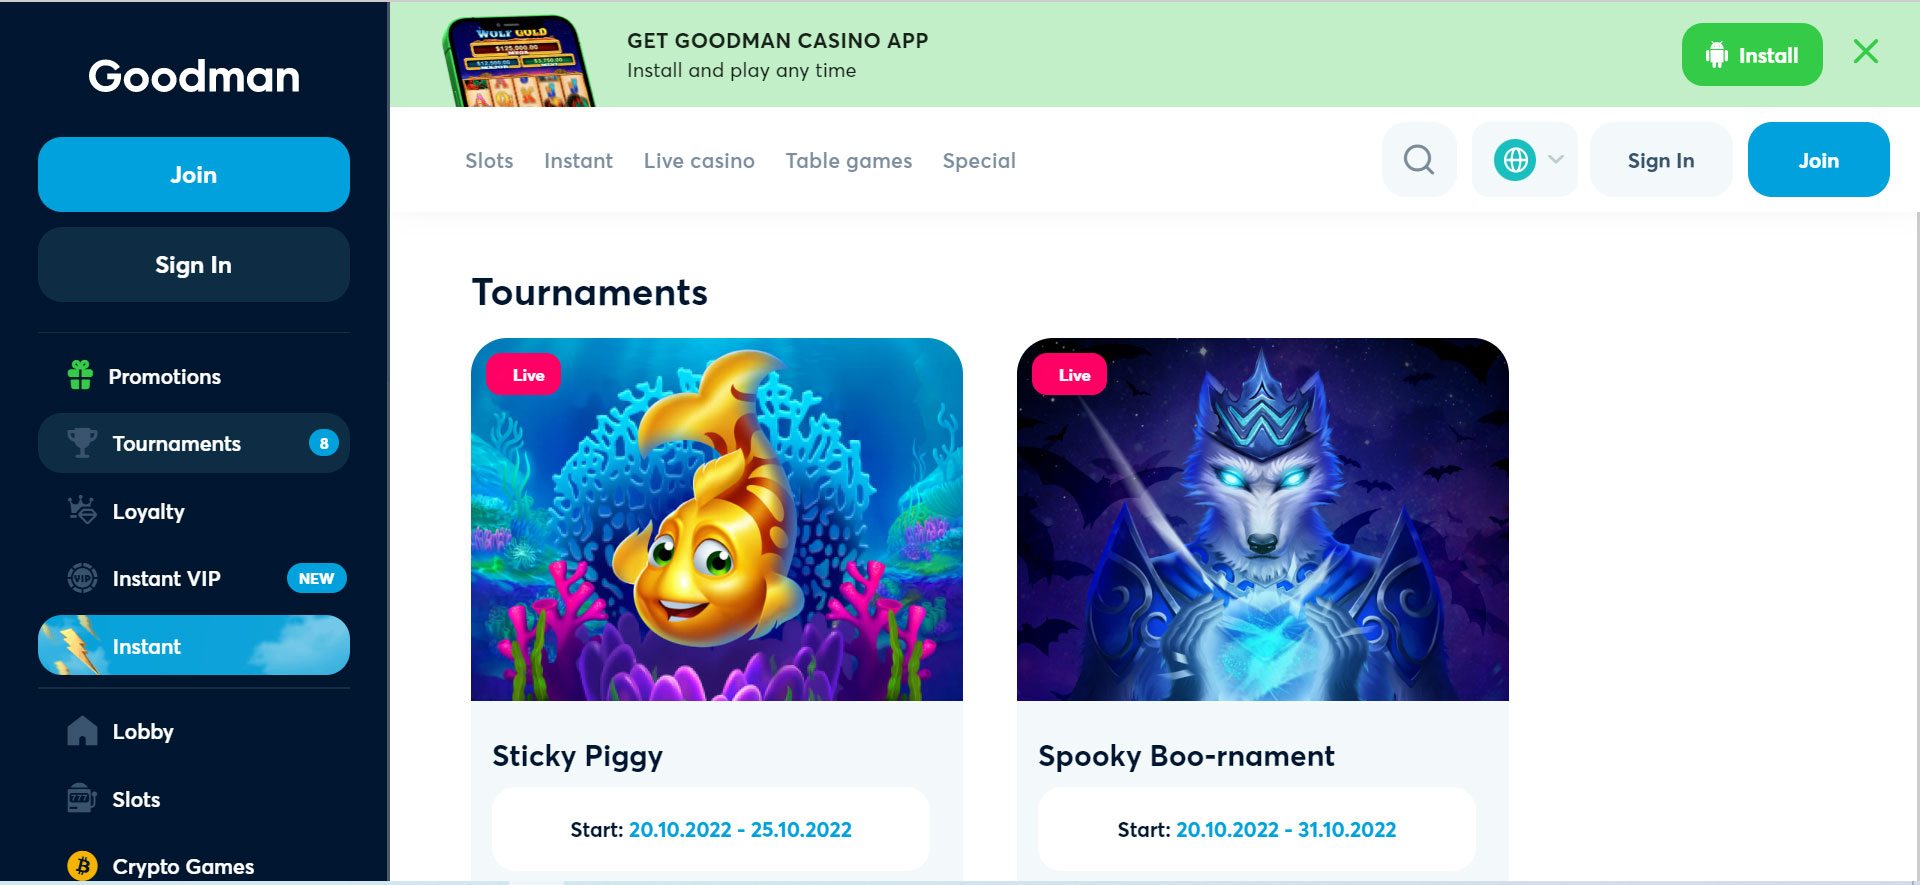 Goodman Casino Tournaments